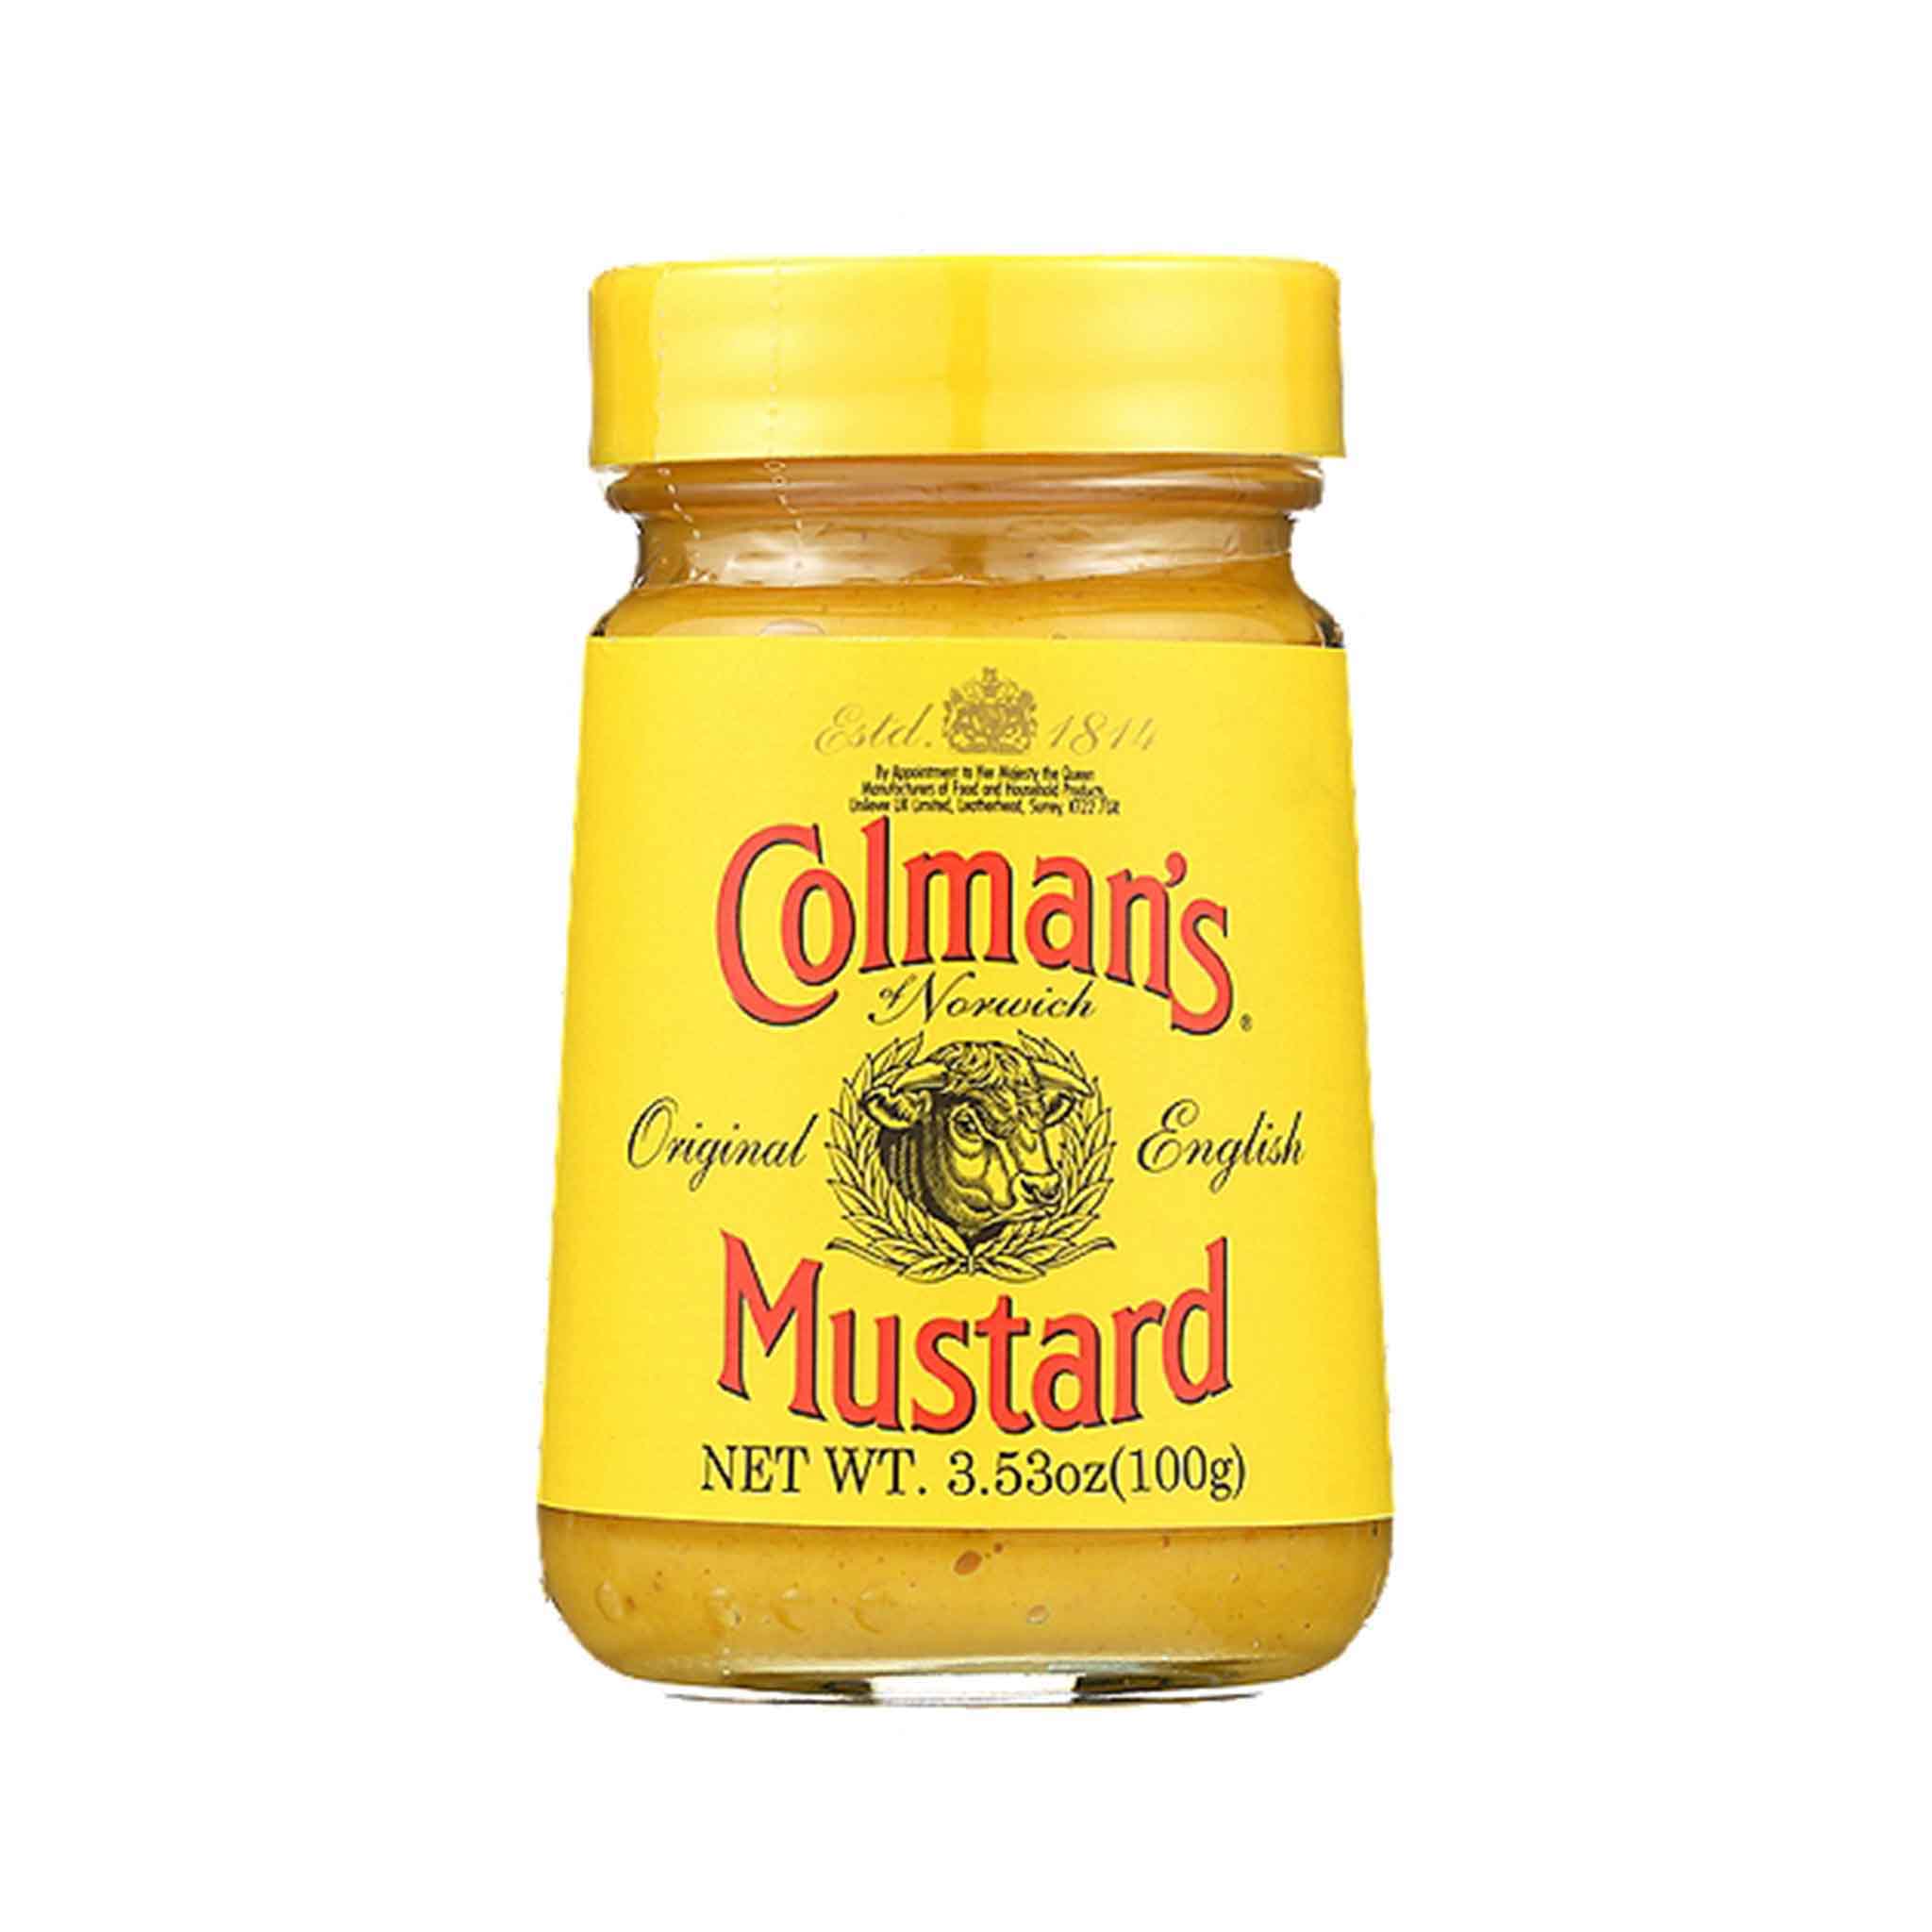 Colmans Original English Mustard in a Jar